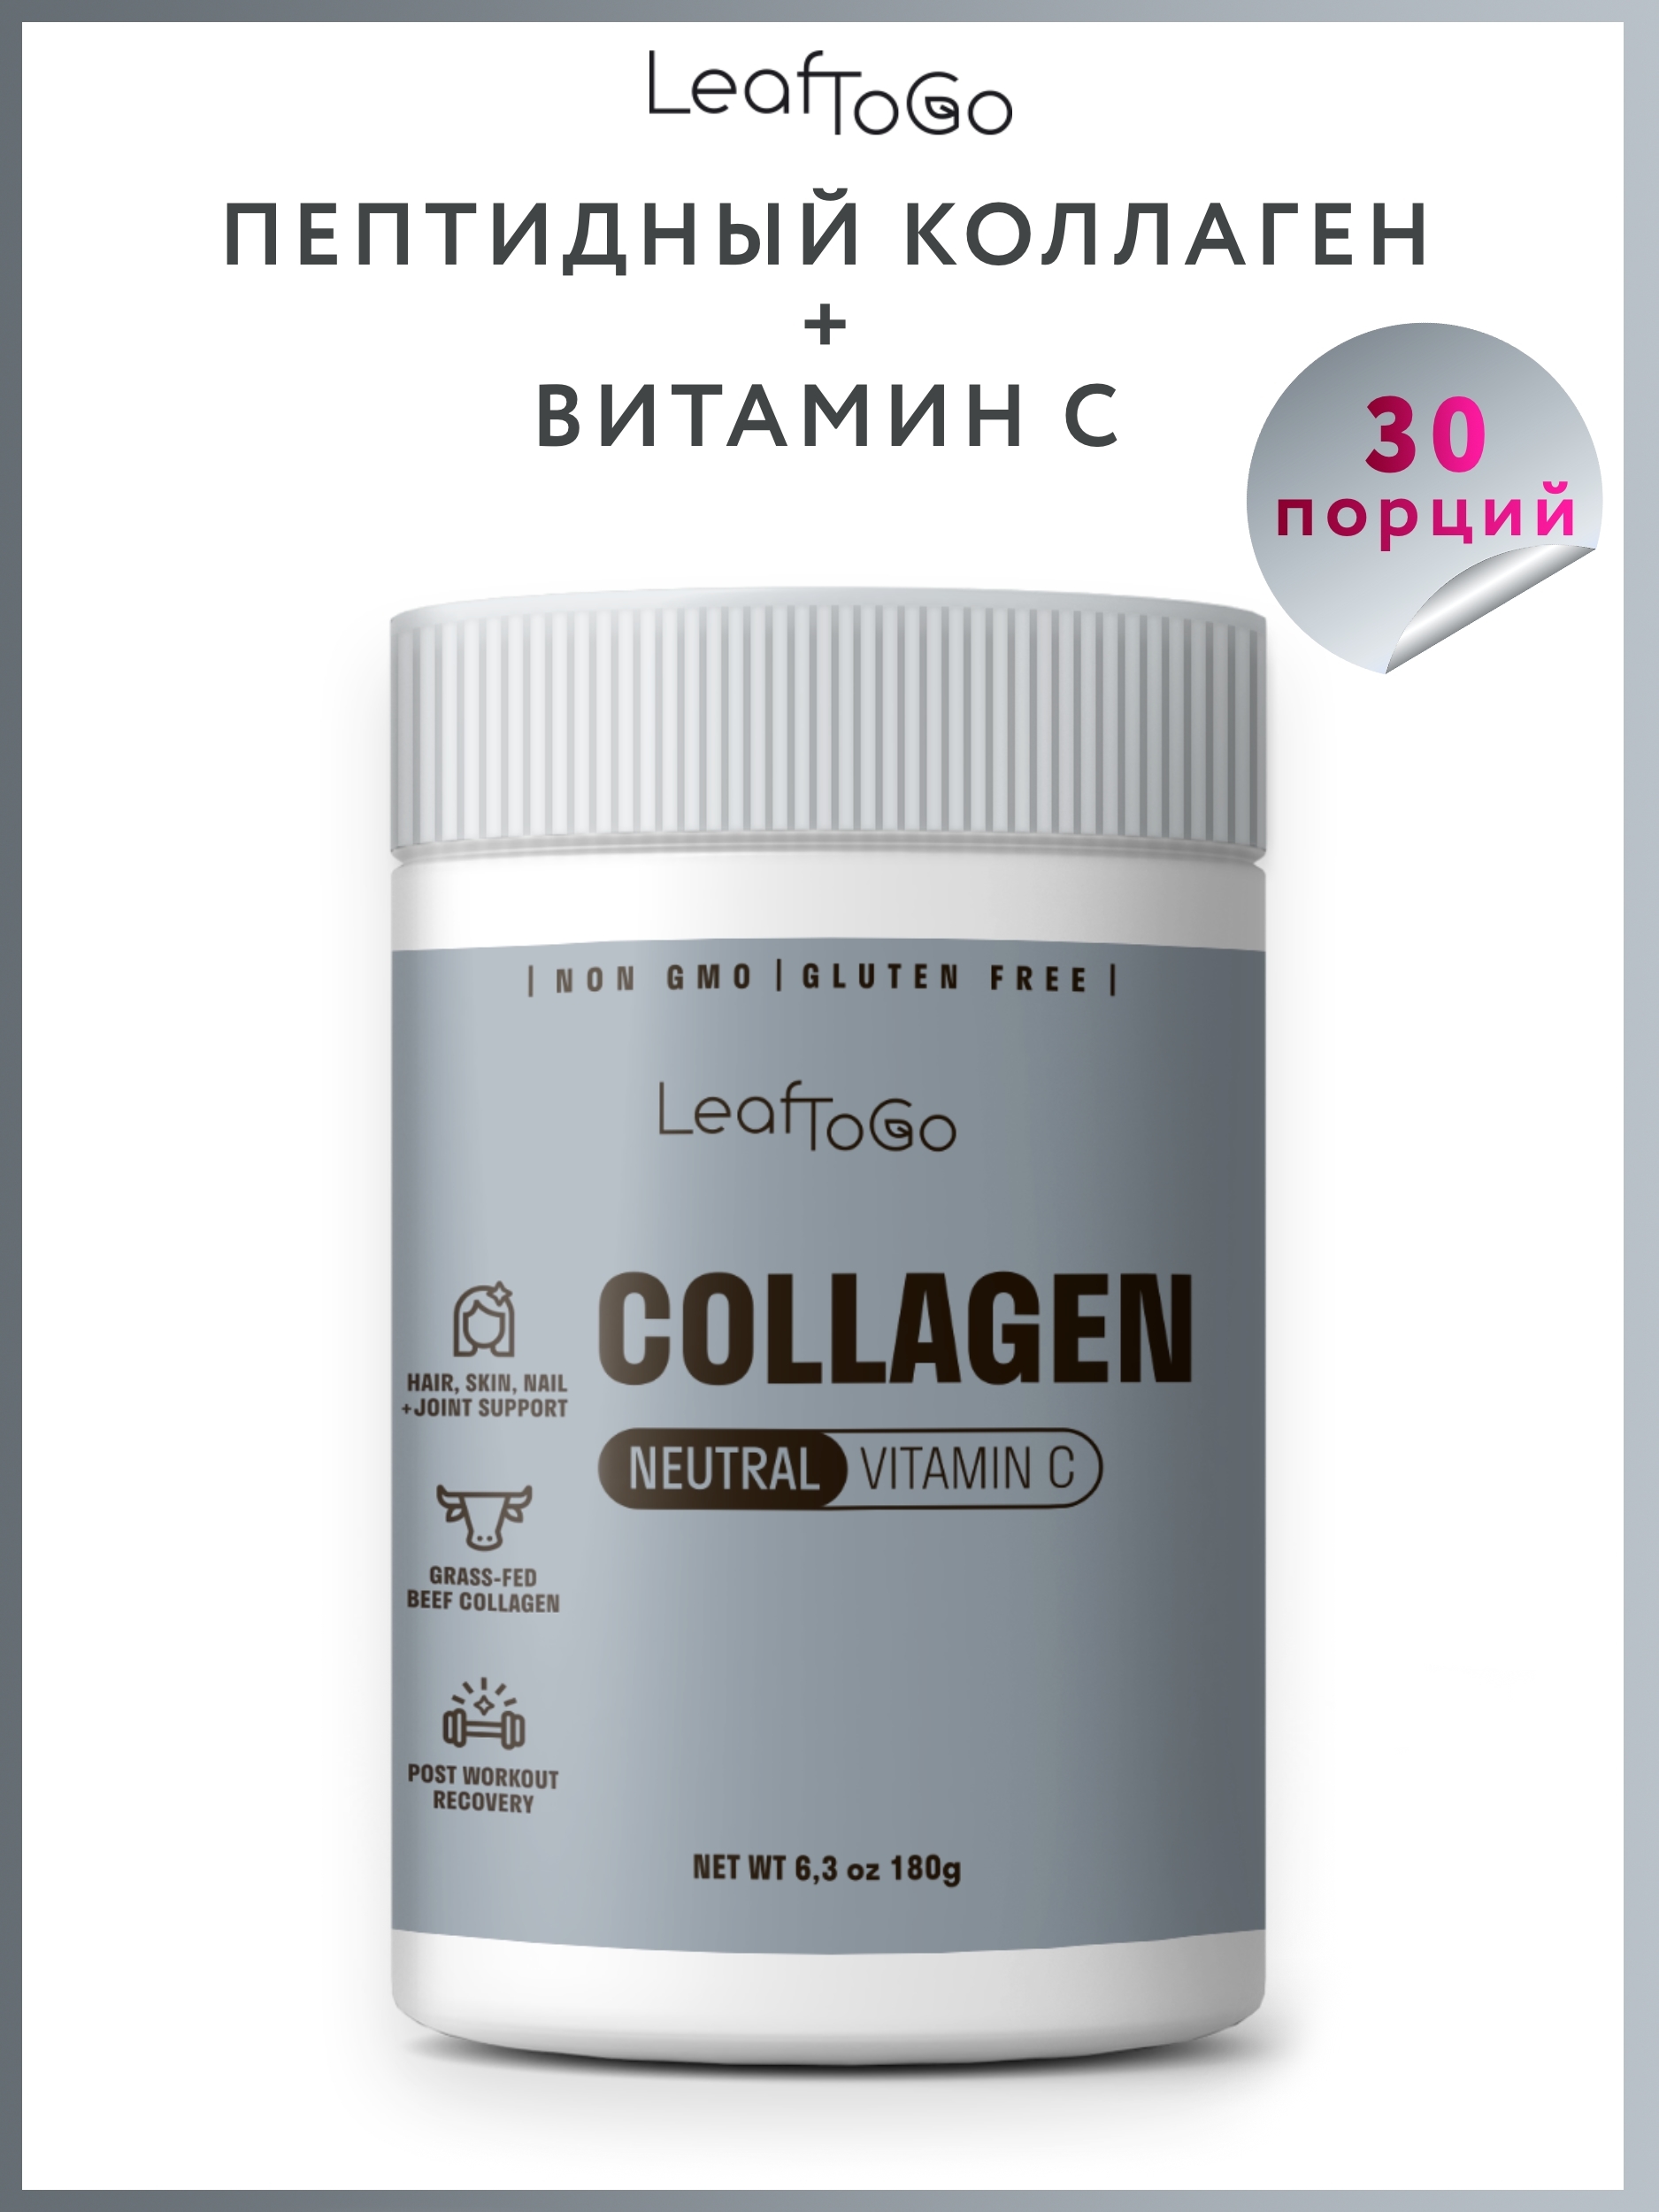 Collagen c отзывы. Коллаген порошок leaftogo. Коллаген leaftogo витамины. Коллаген Neutral Vitamin c leaftogo. Leaftogo / коллаген пептидный + витамин c 180 г 30 порций.